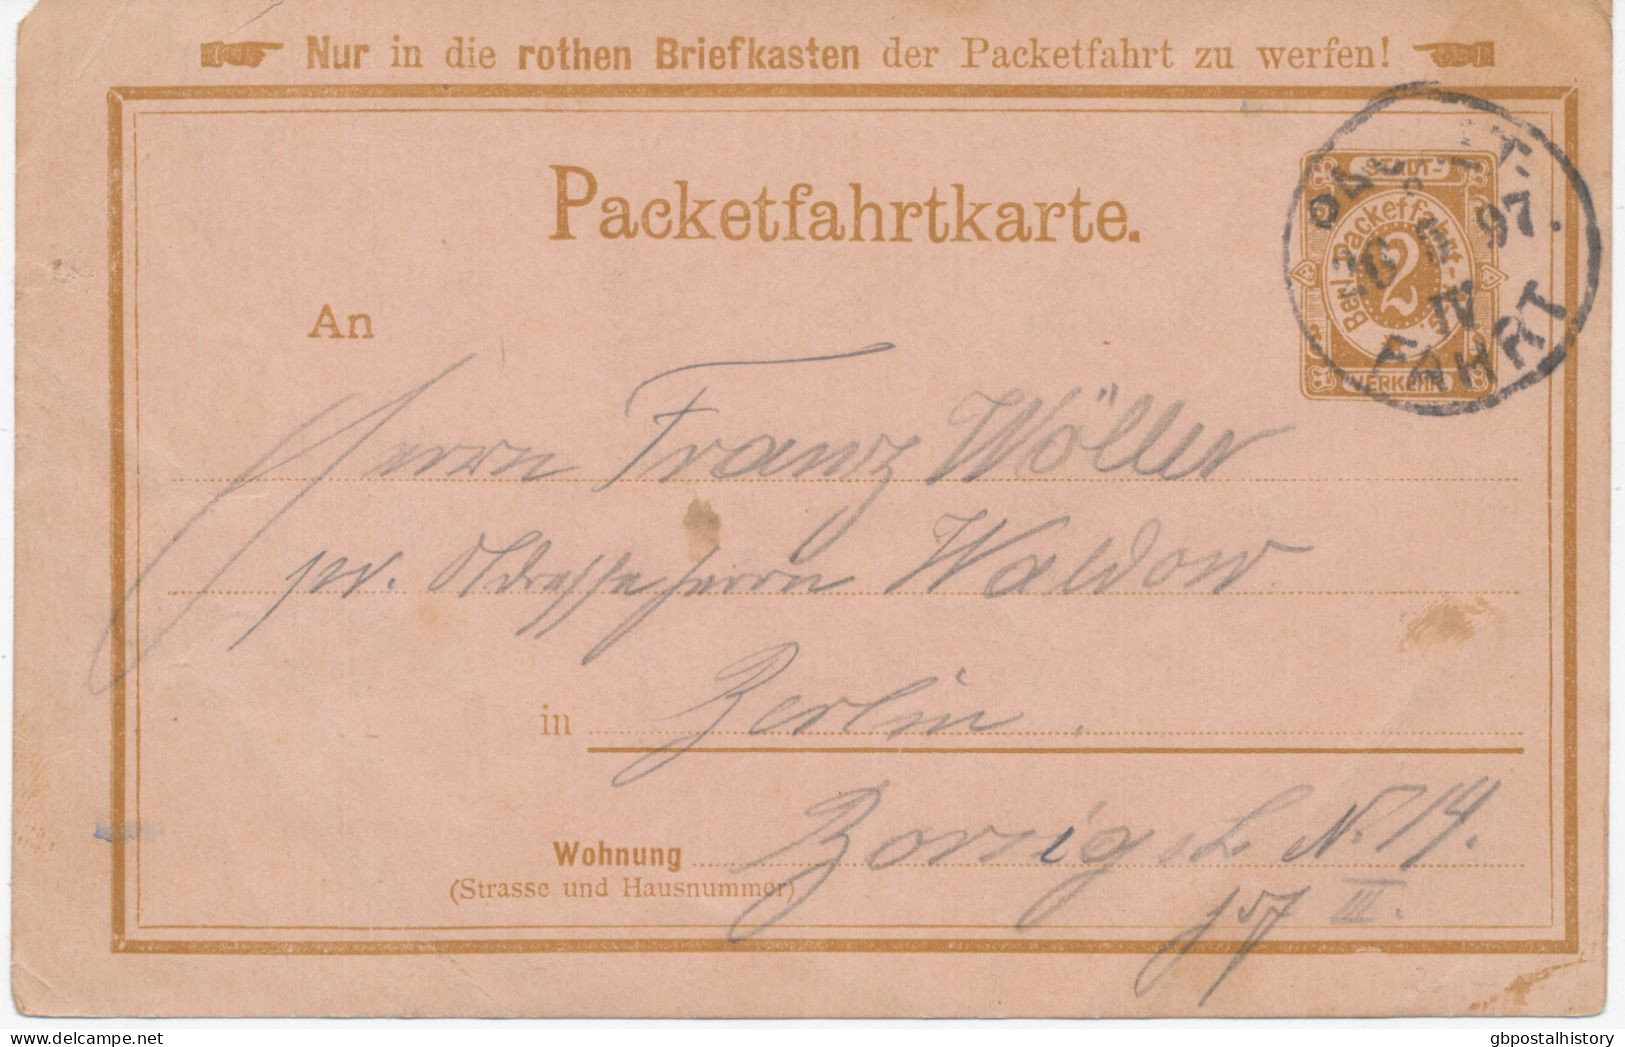 BERLIN 1897 BERLIN Packetfahrtkarte 2 Pf GA-Postkarte Der Beliner Packertfahrt AG Mit K1 „PACKET-FAHRT“, Selten - Cartes Postales Privées - Oblitérées